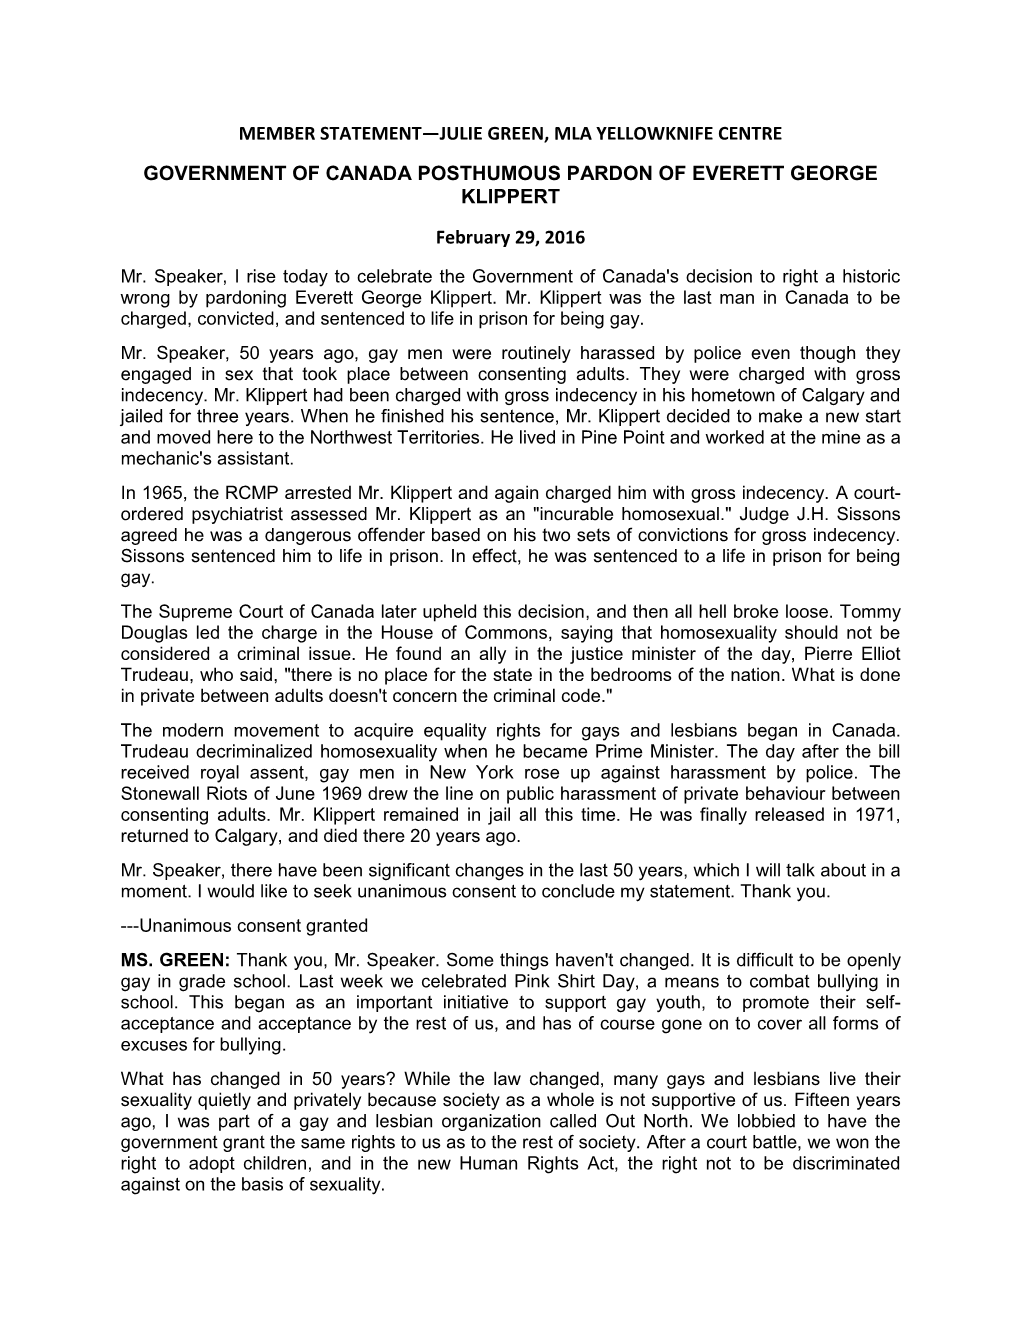 Member Statement—Julie Green, Mla Yellowknife Centre Government of Canada Posthumous Pardon of Everett George Klippert